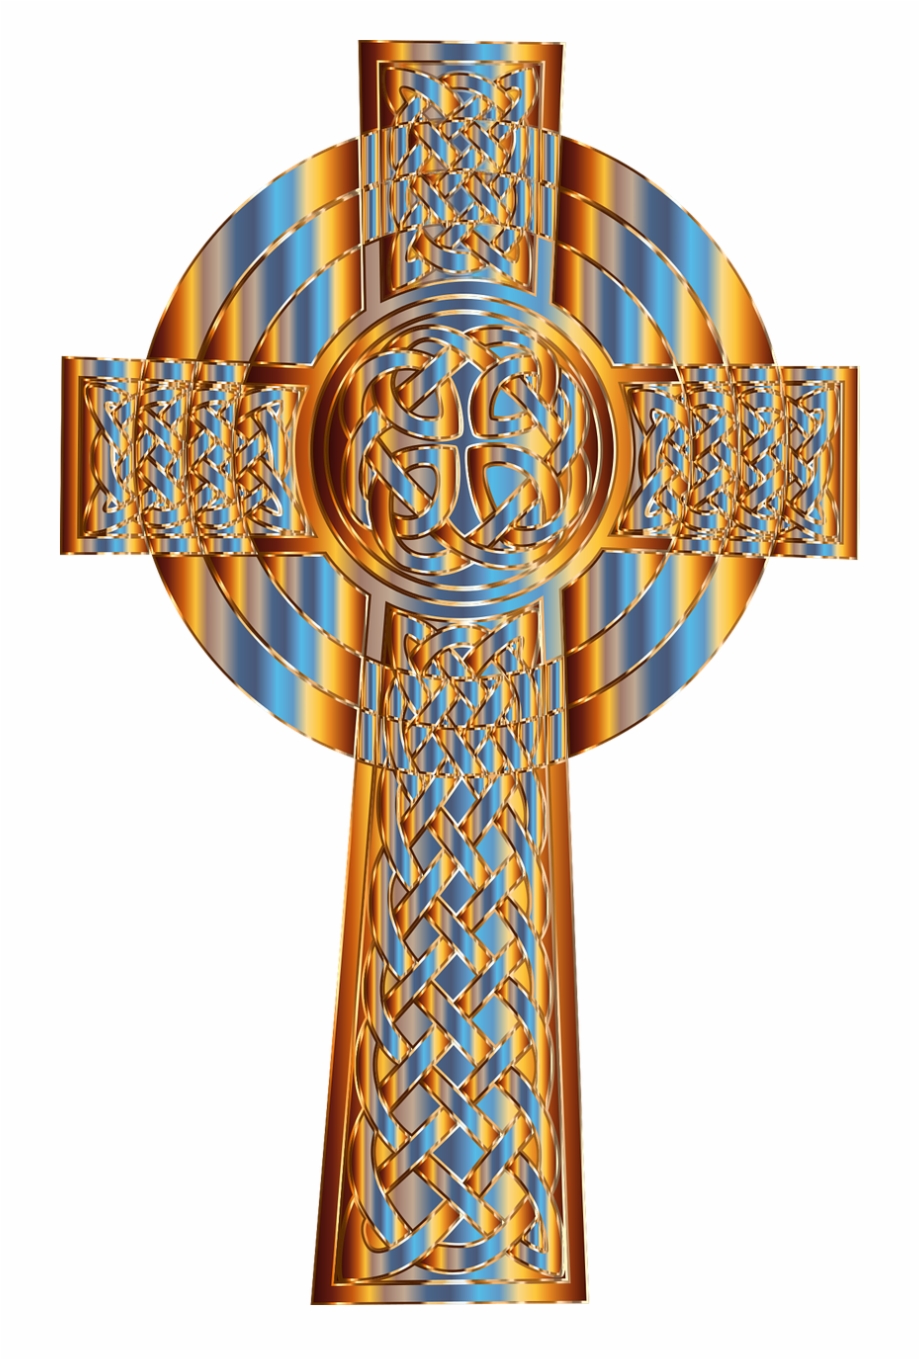 Christian cross
